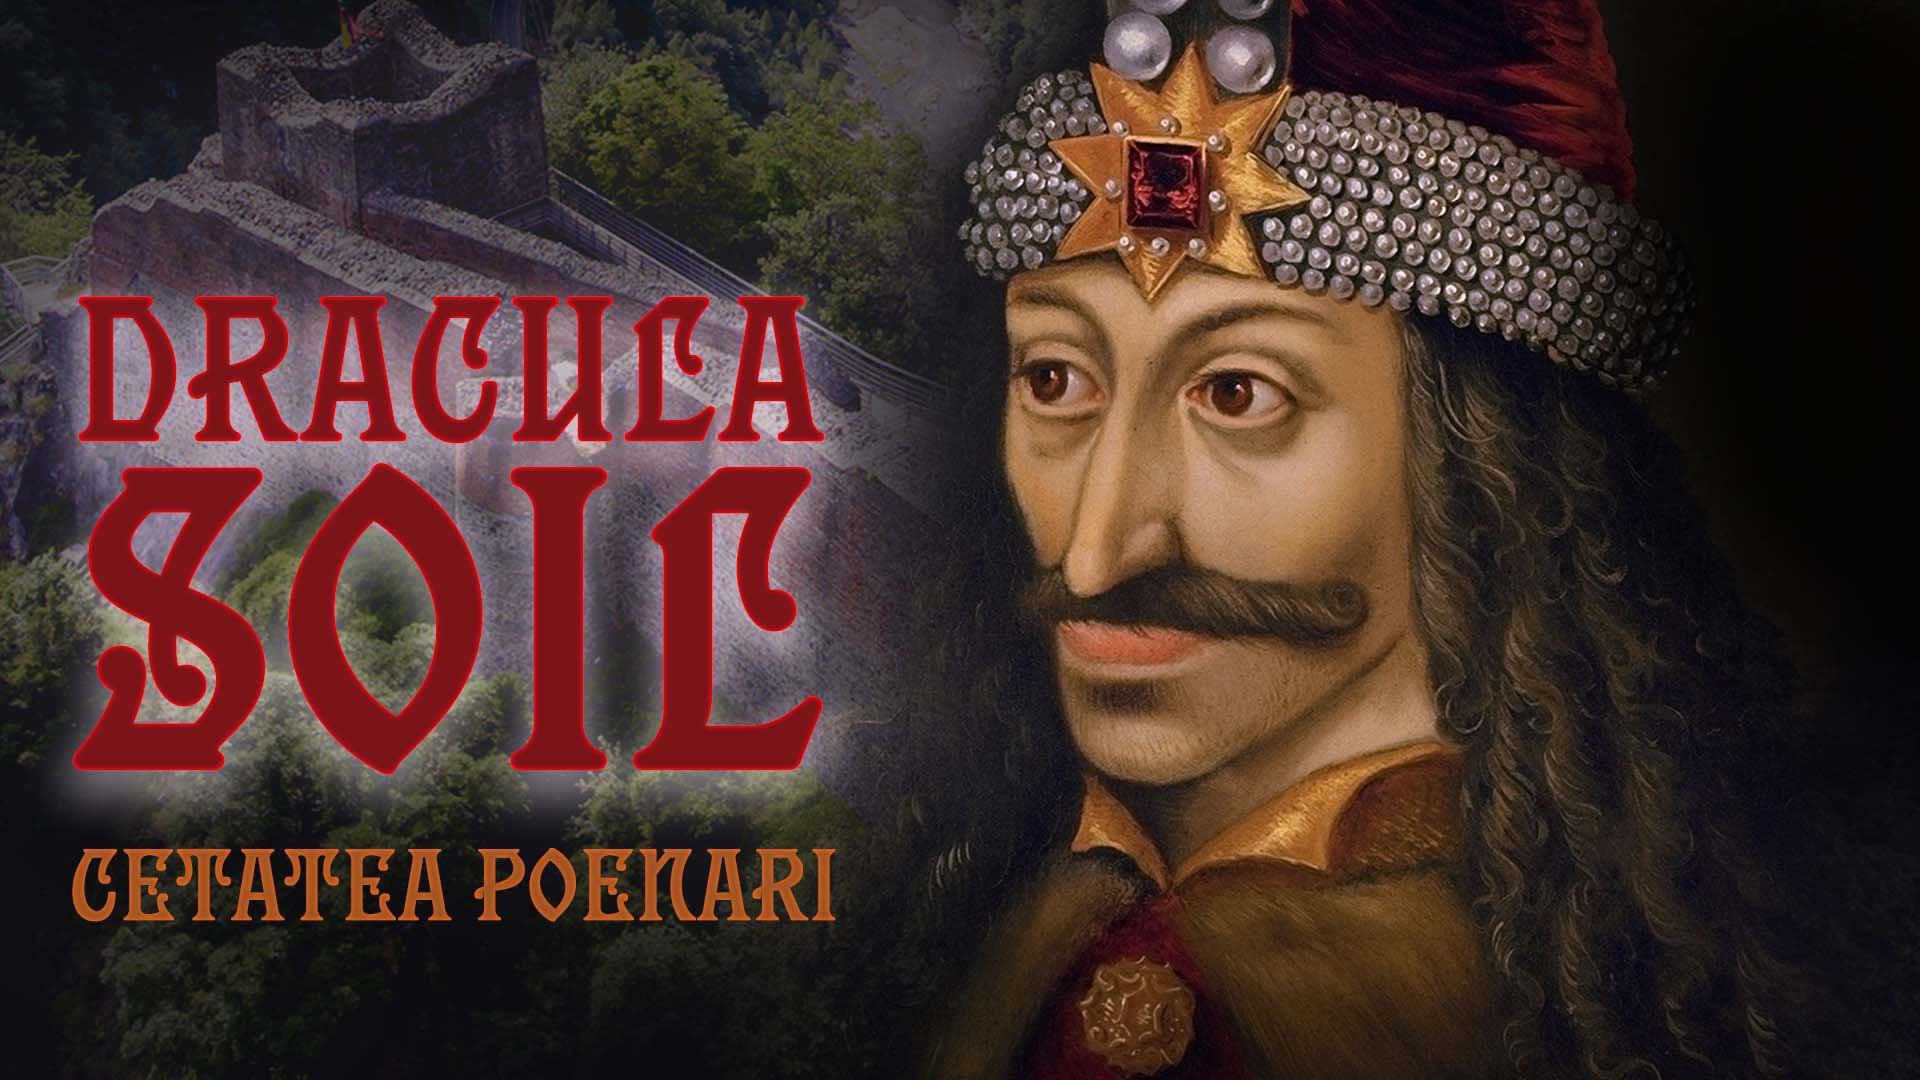 Dracula Soil Specimen - A Vial of Earth from Cetatea Poenari